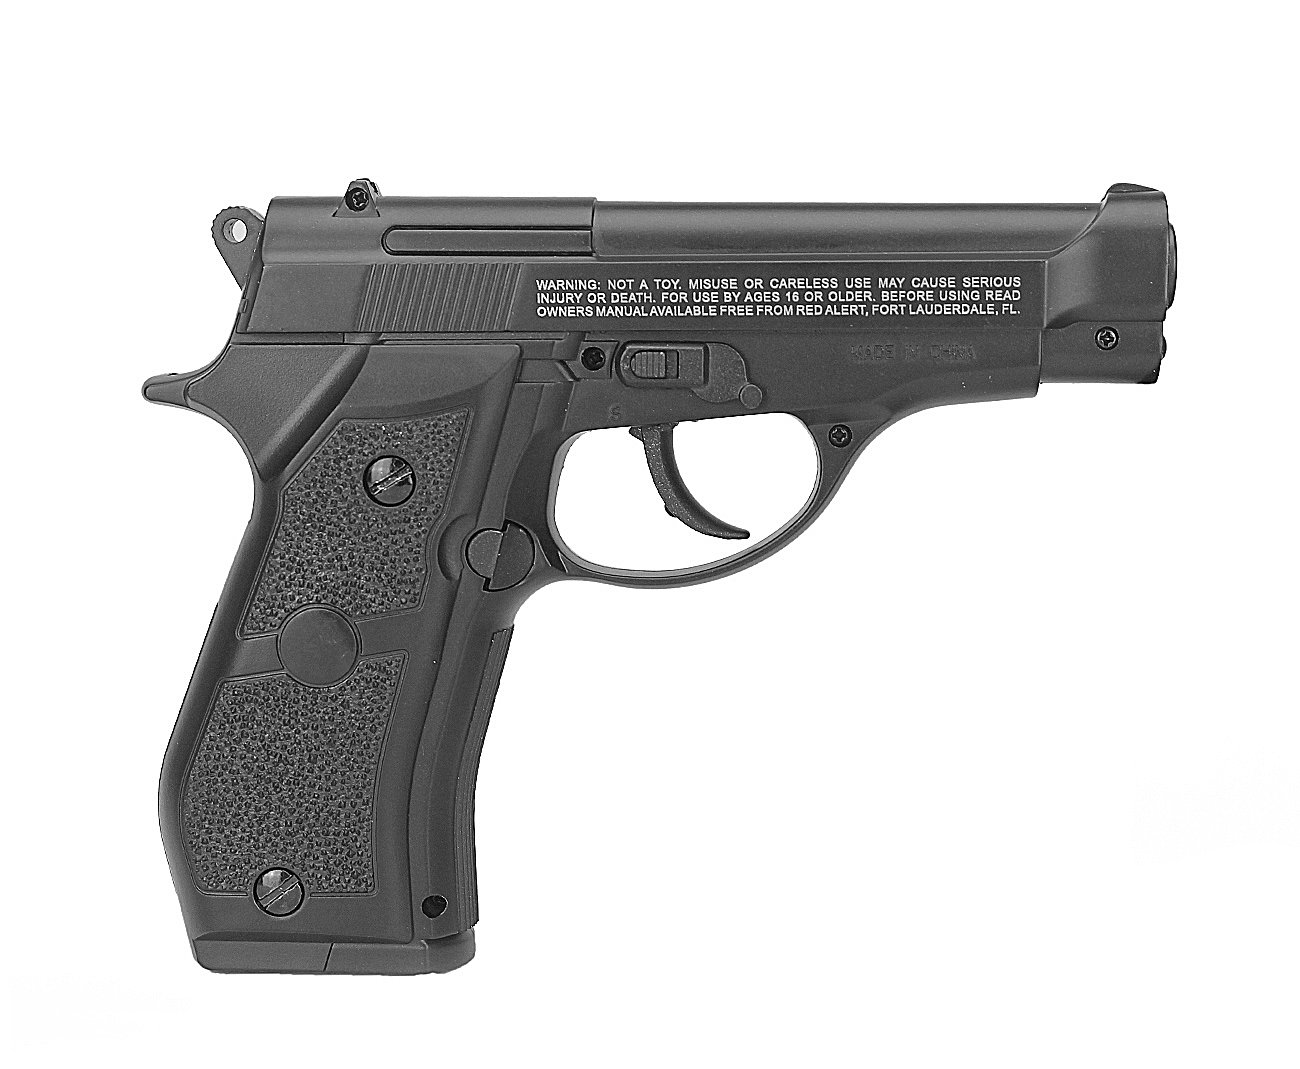 Pistola De Pressão A Gás Co2 Rd-compact Full Metal Black 4.5mm - Red Alert